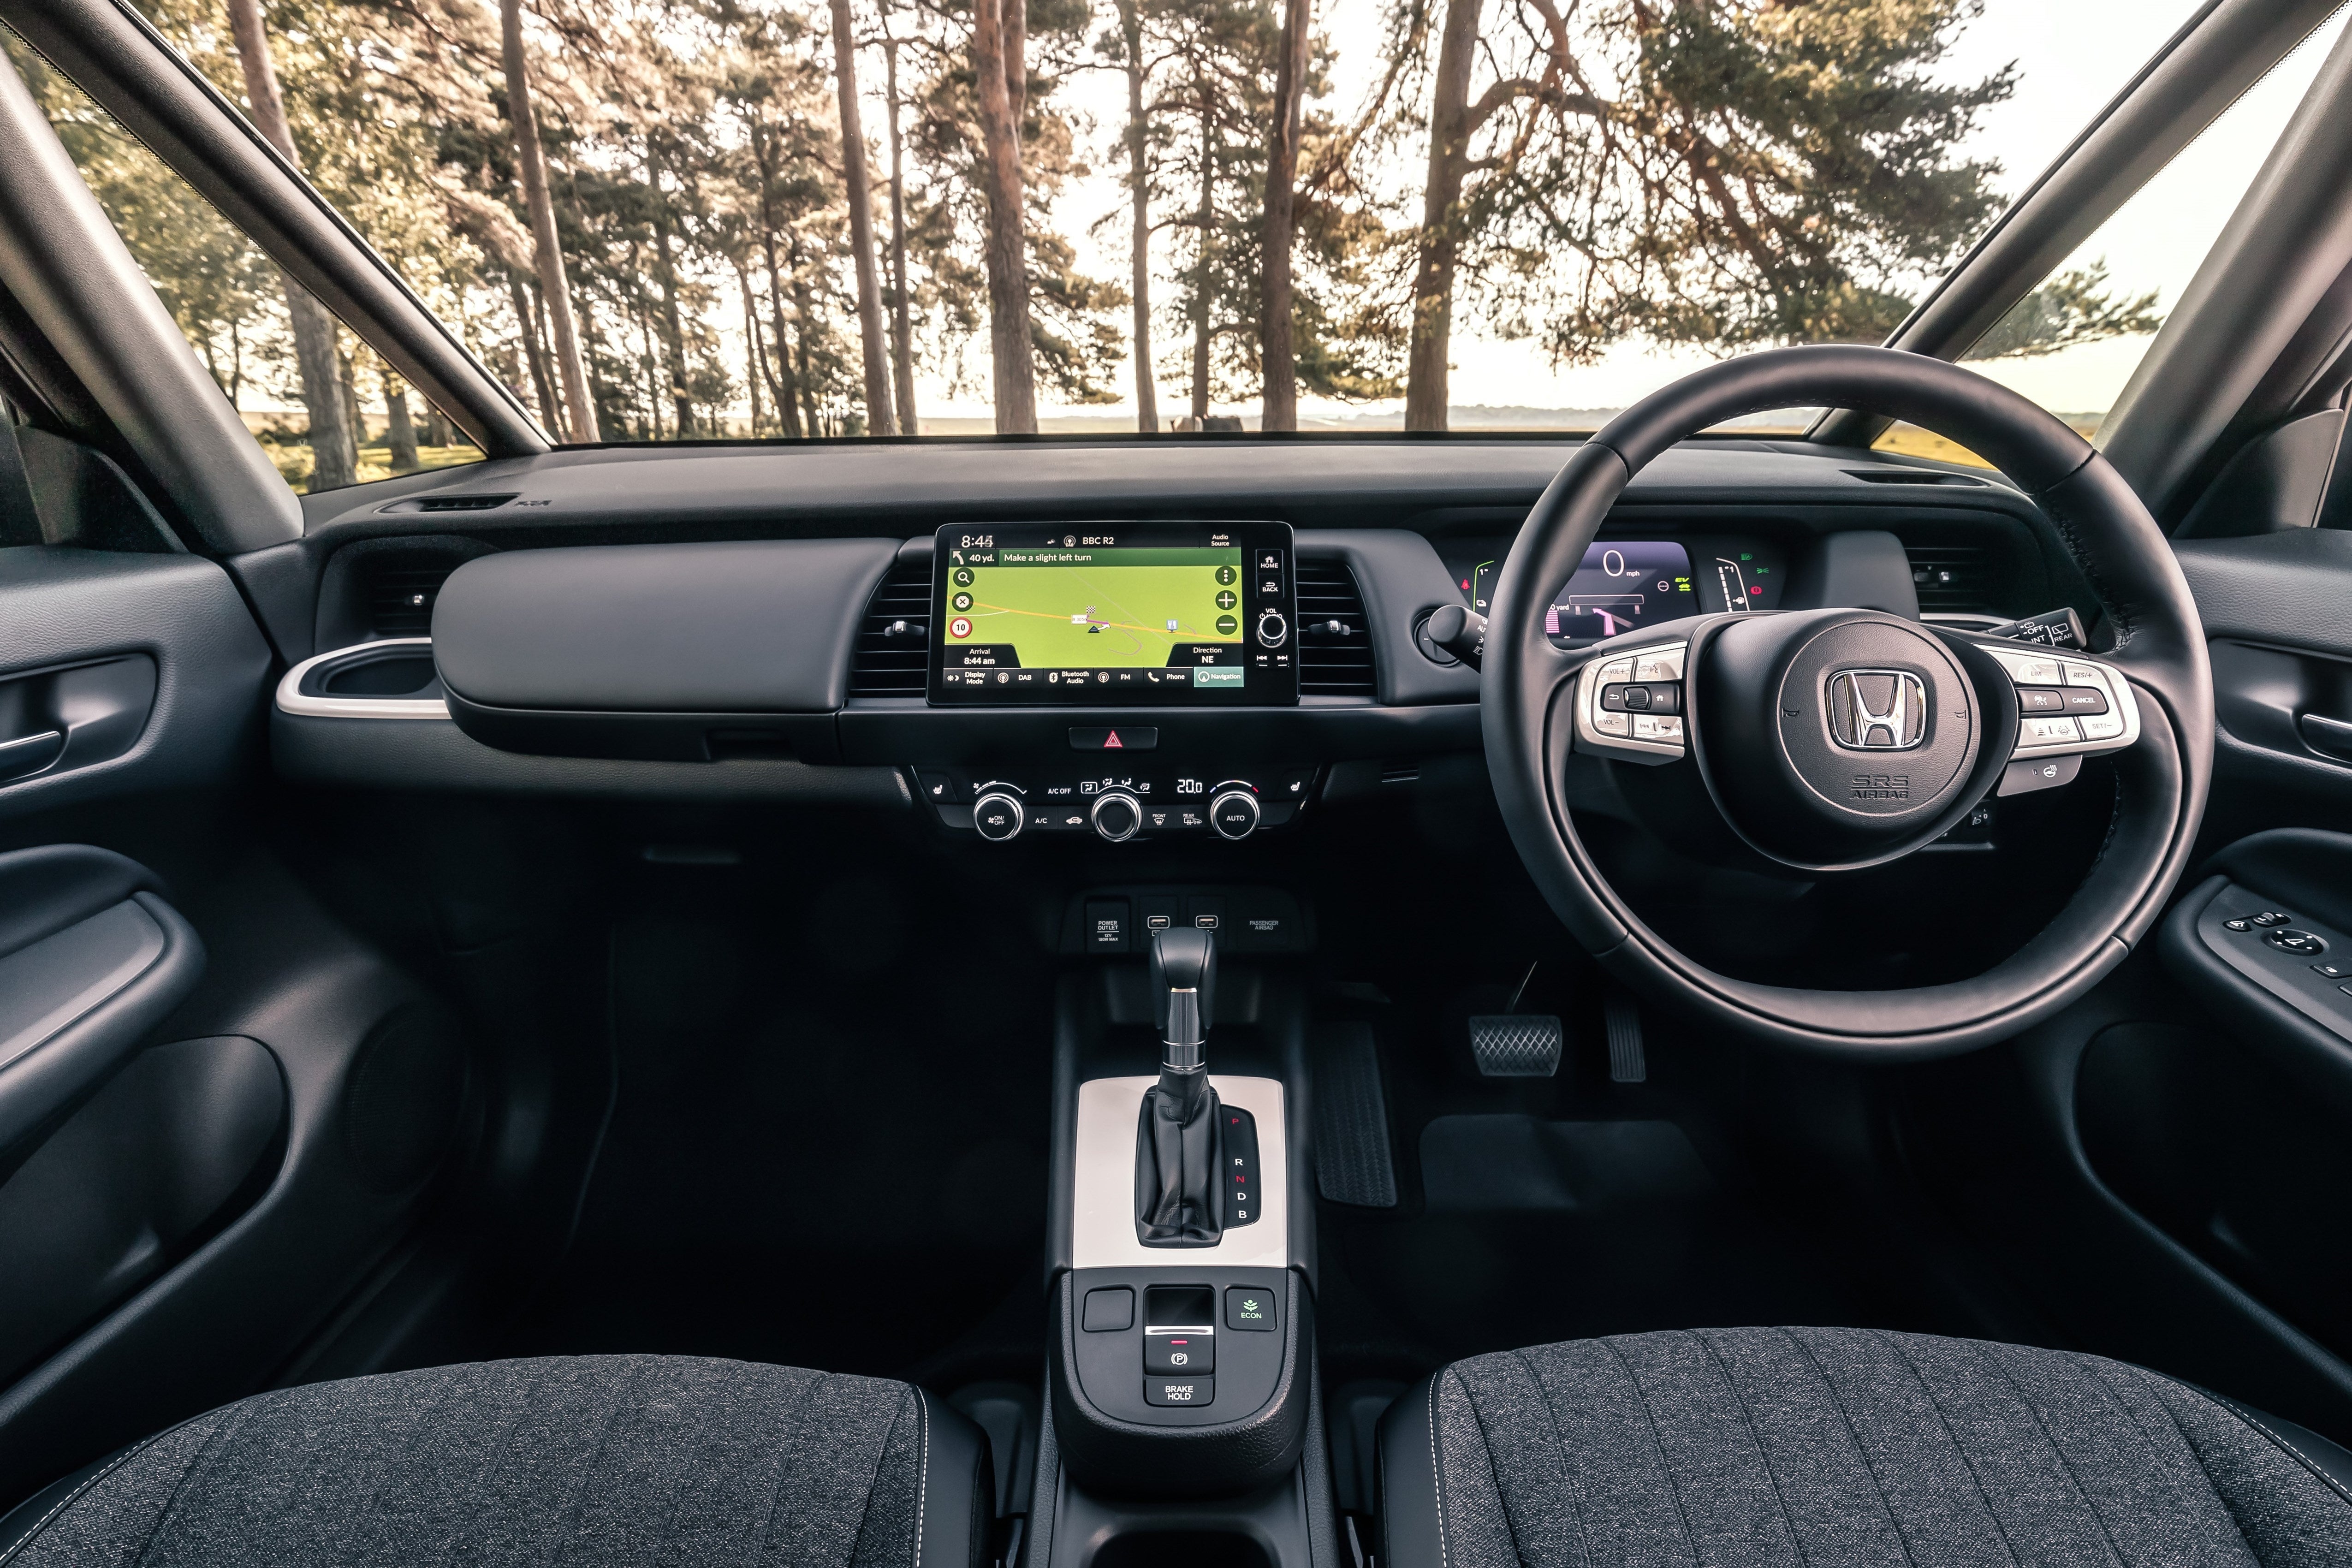 Honda Jazz Review 2022 interior and dashboard